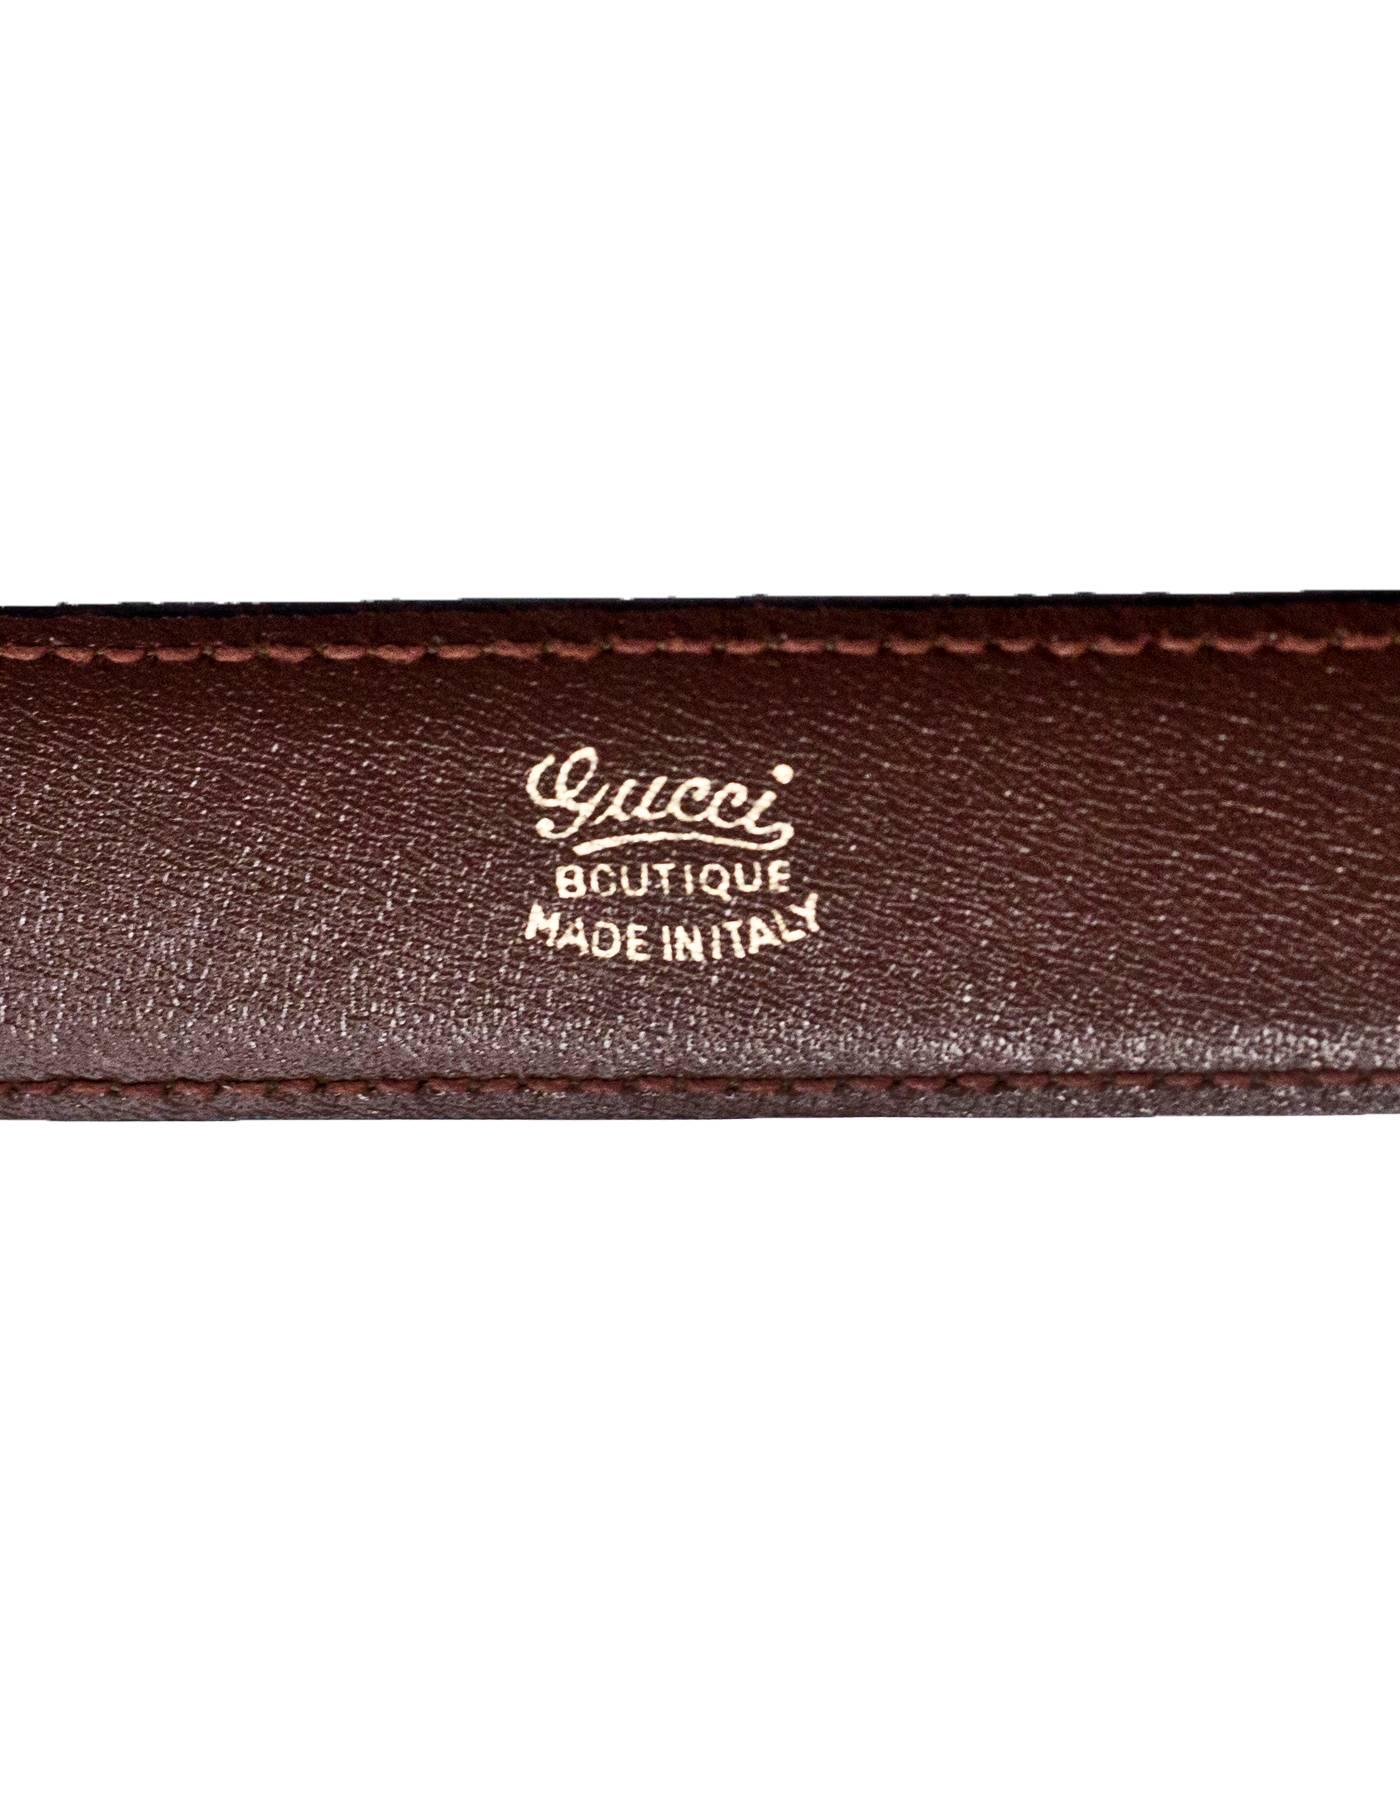 Gucci Brown Leather Belt Sz 75 4